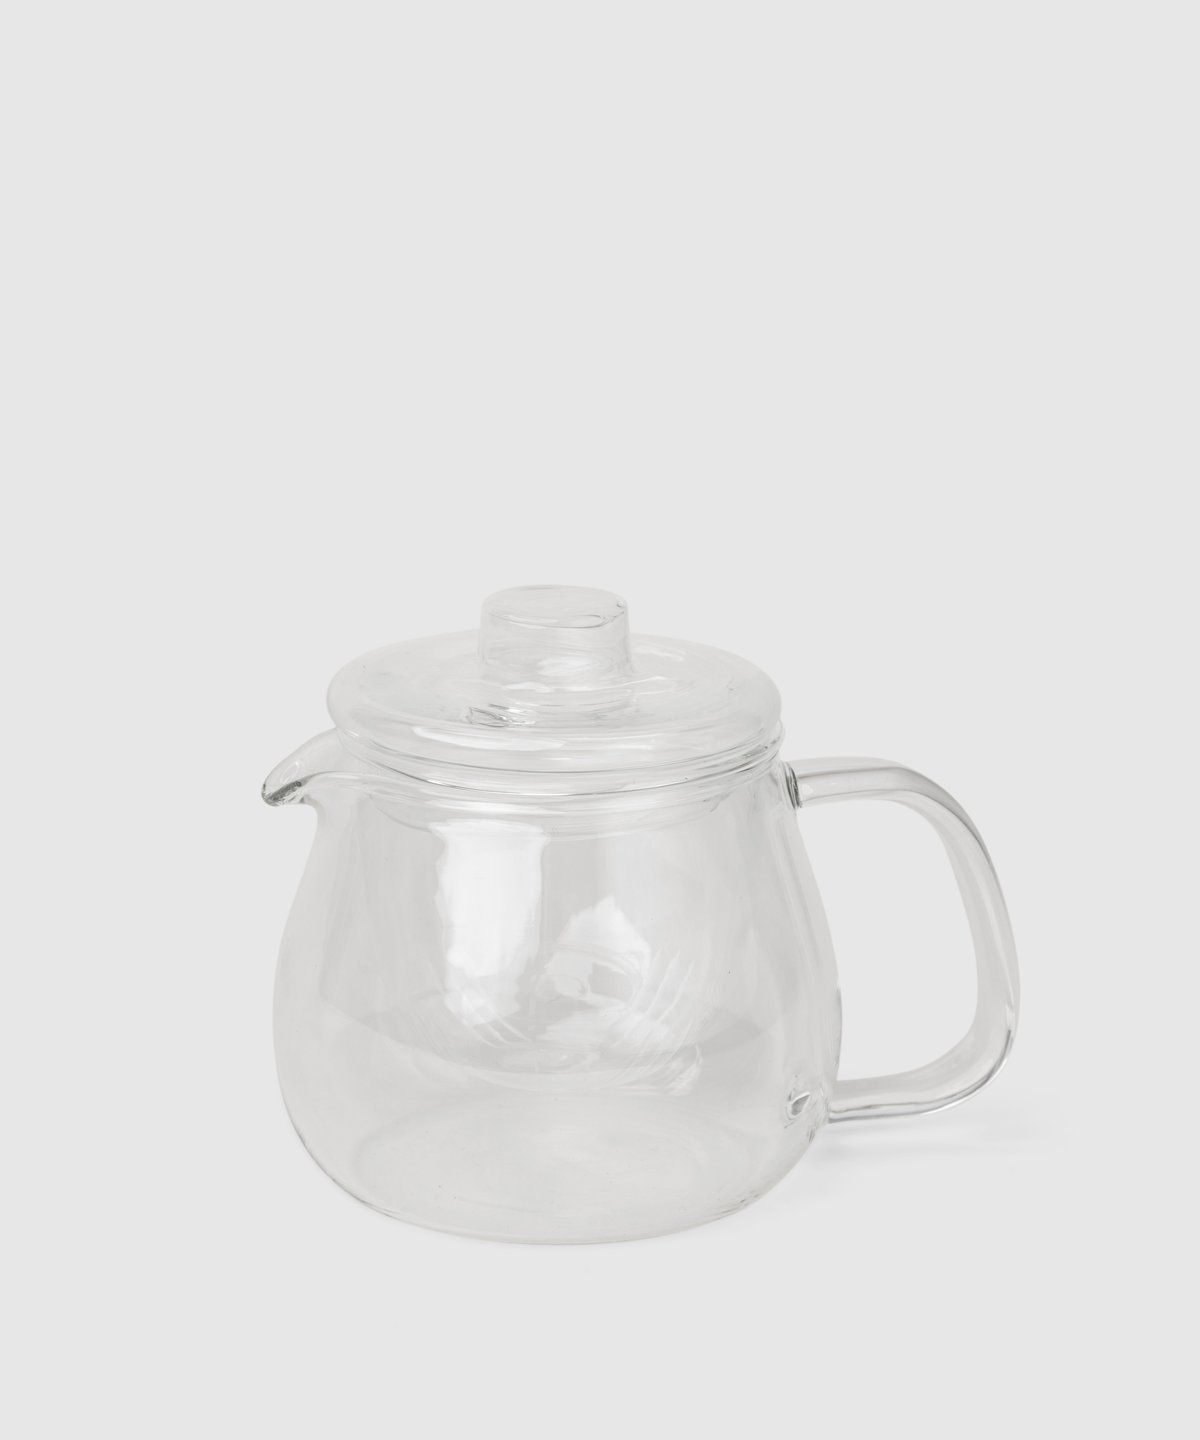 Glass Brew & Serve Teapot